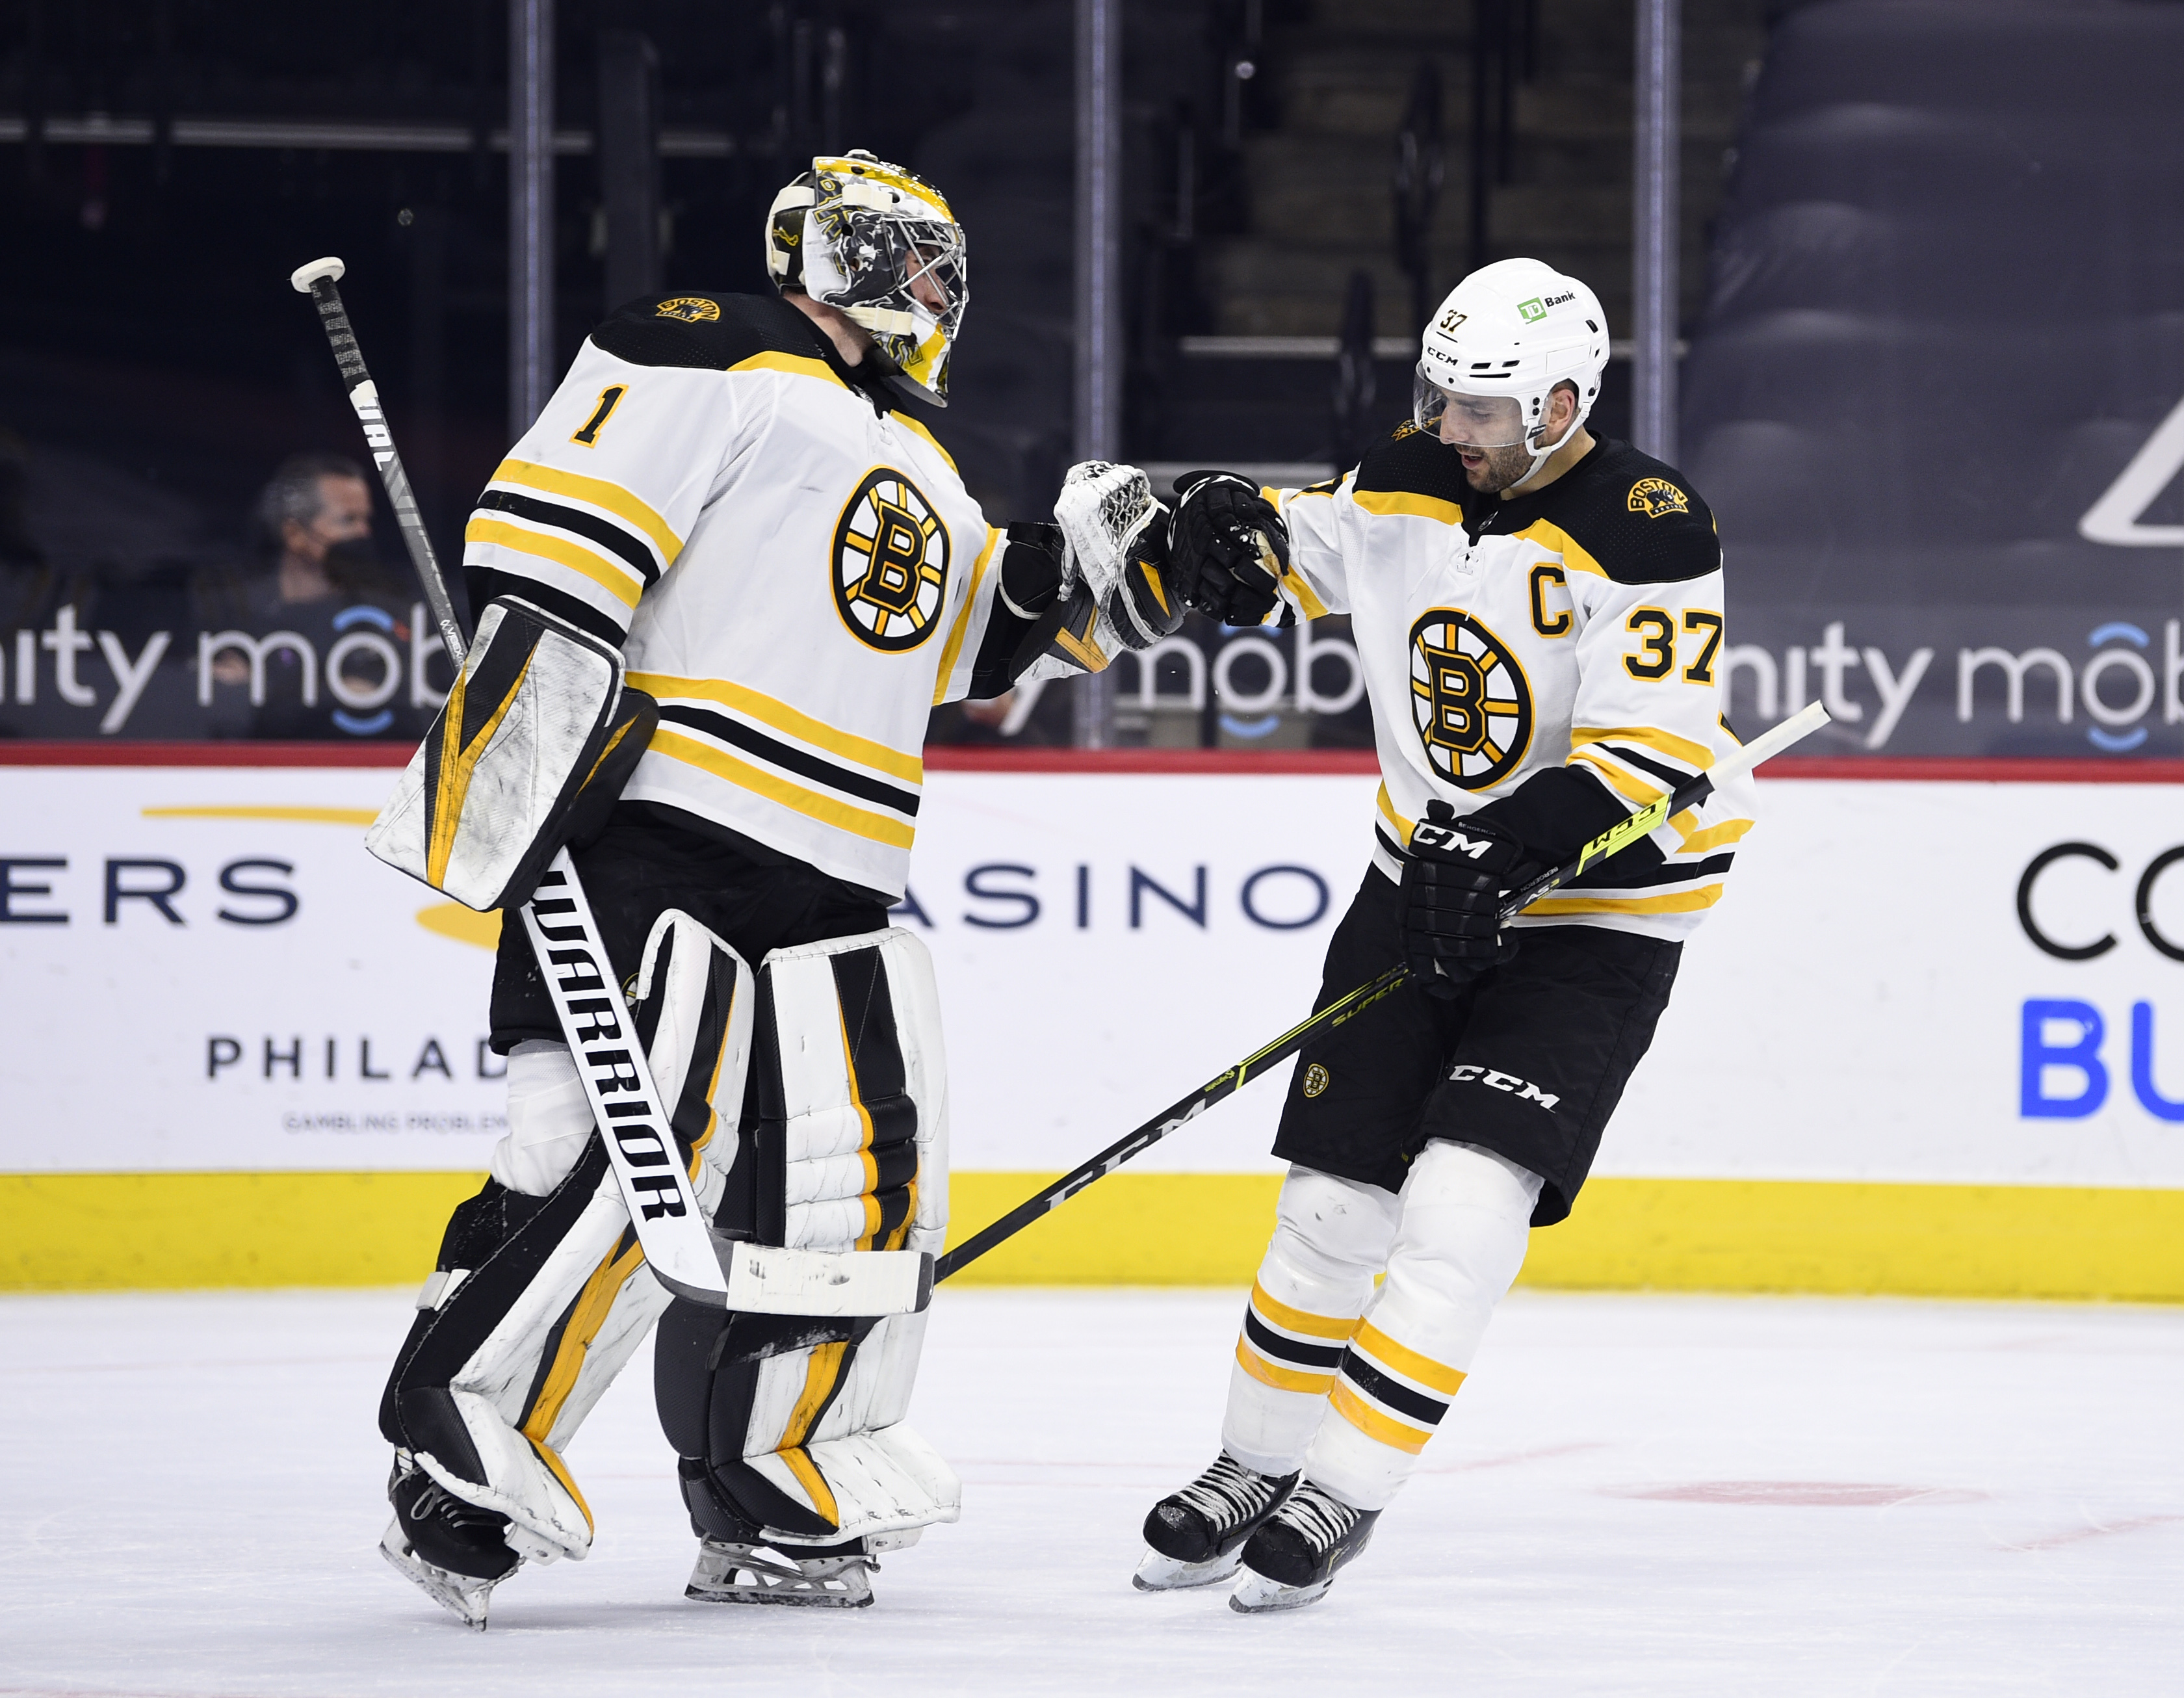 Tuukka's in trouble now': How Bruins goalie Jeremy Swayman grew